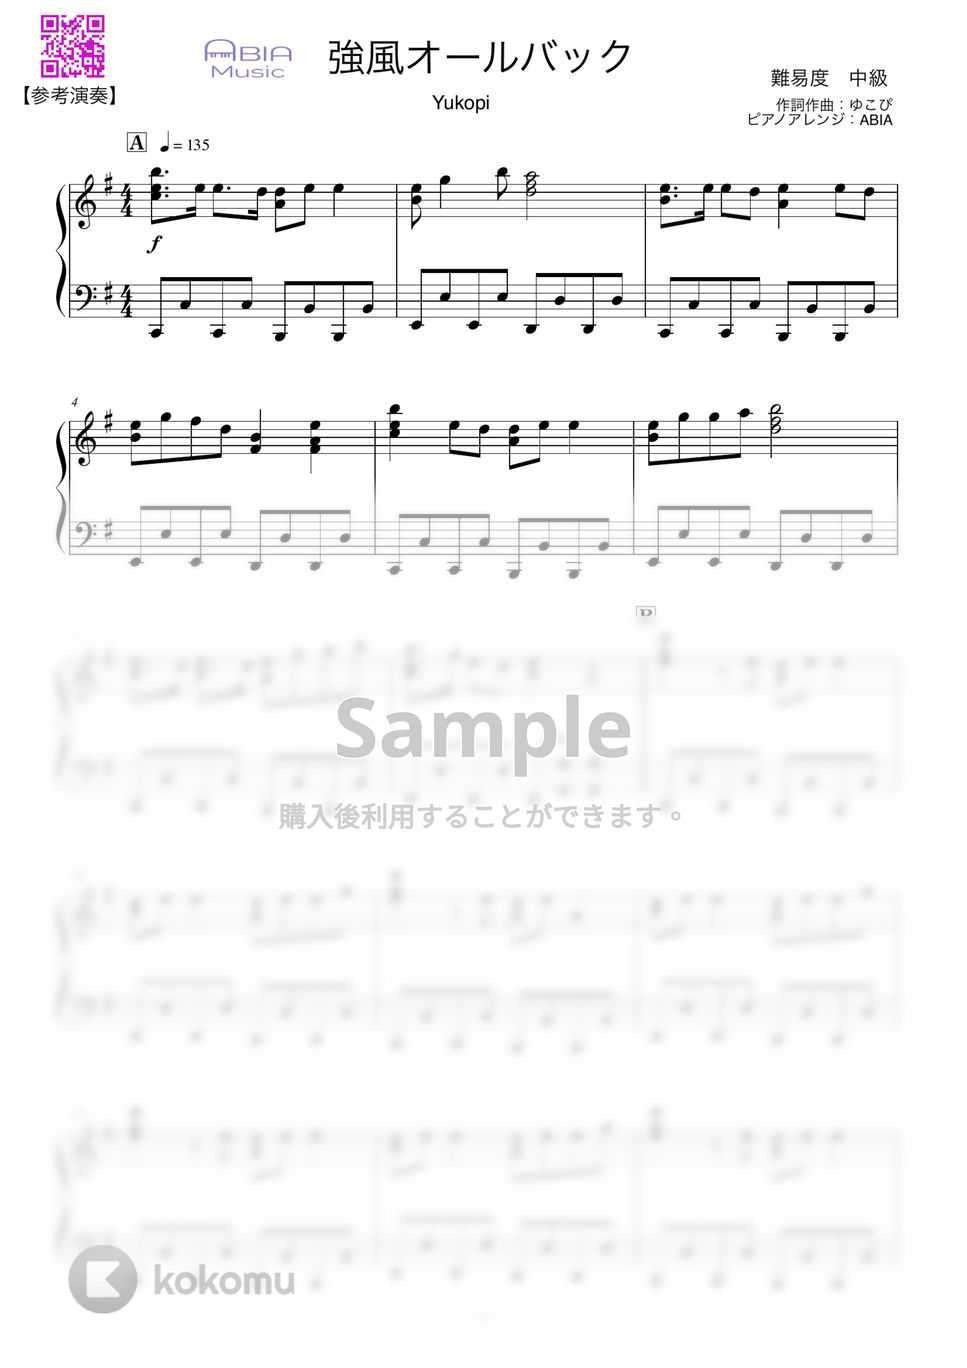 Yukopi - 強風オールバック by ABIA Music